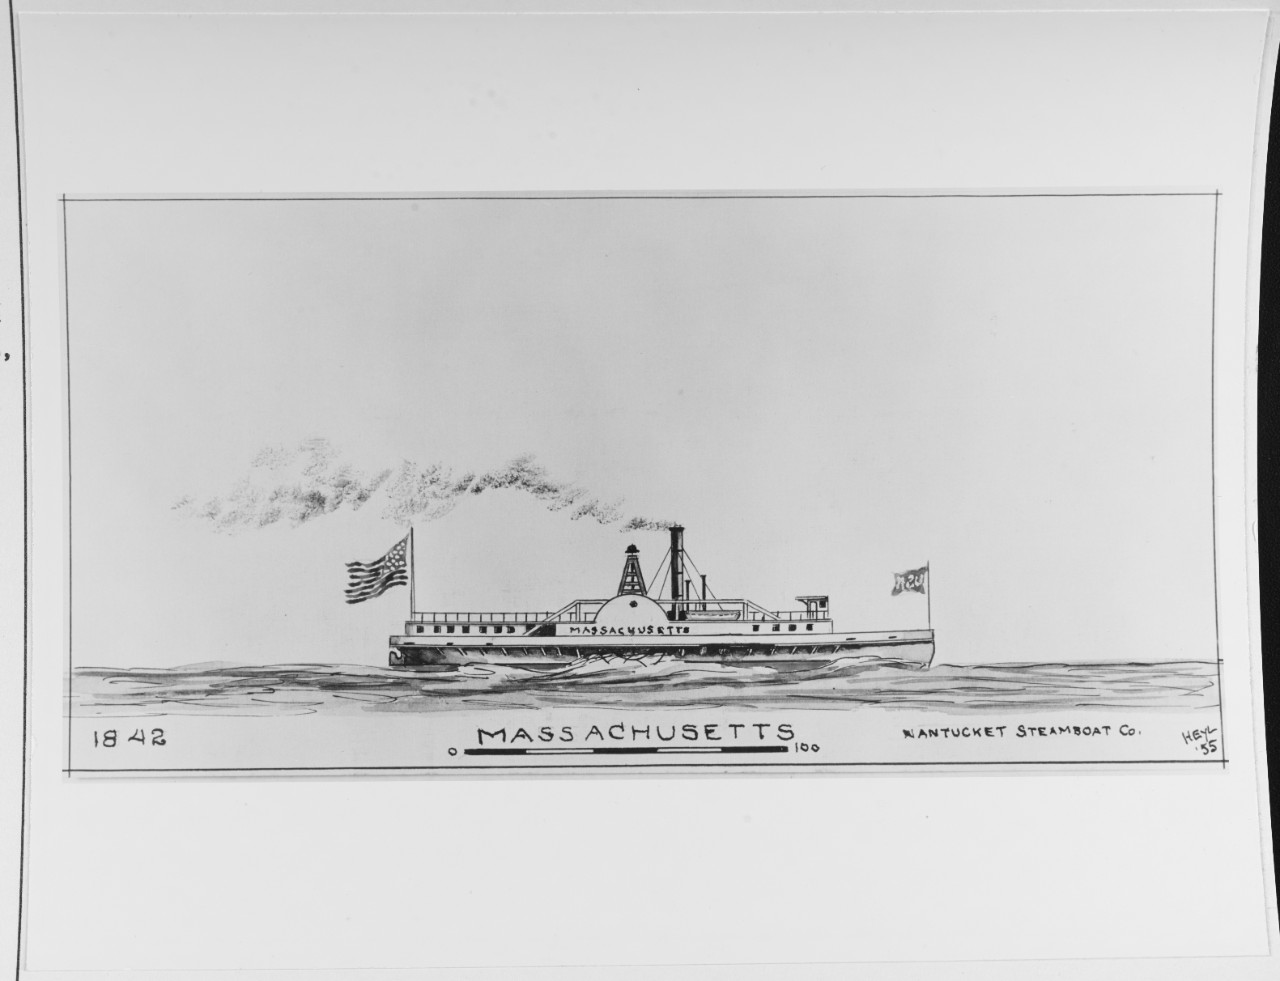 MASSACHUSETTS (American merchant steamer, 1842-1881)